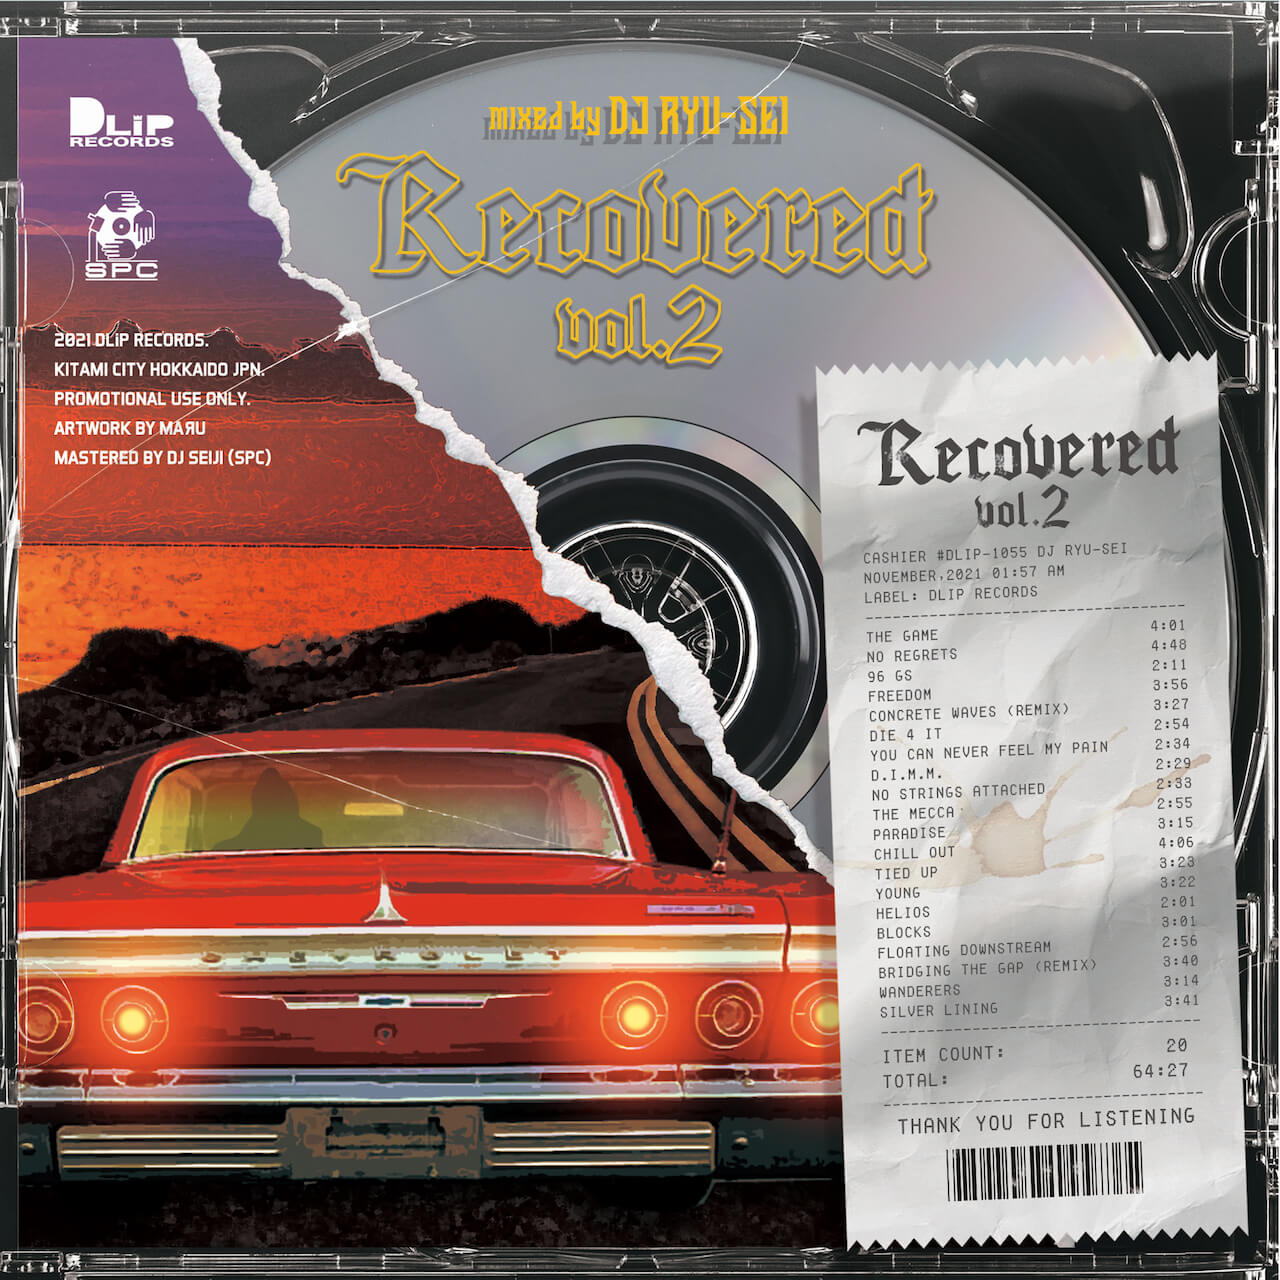 〈DLiP RECORDS〉より、DJ RYU-SEIがMIX CD『Recovered vol.2』をリリース music211104-djryusei-3